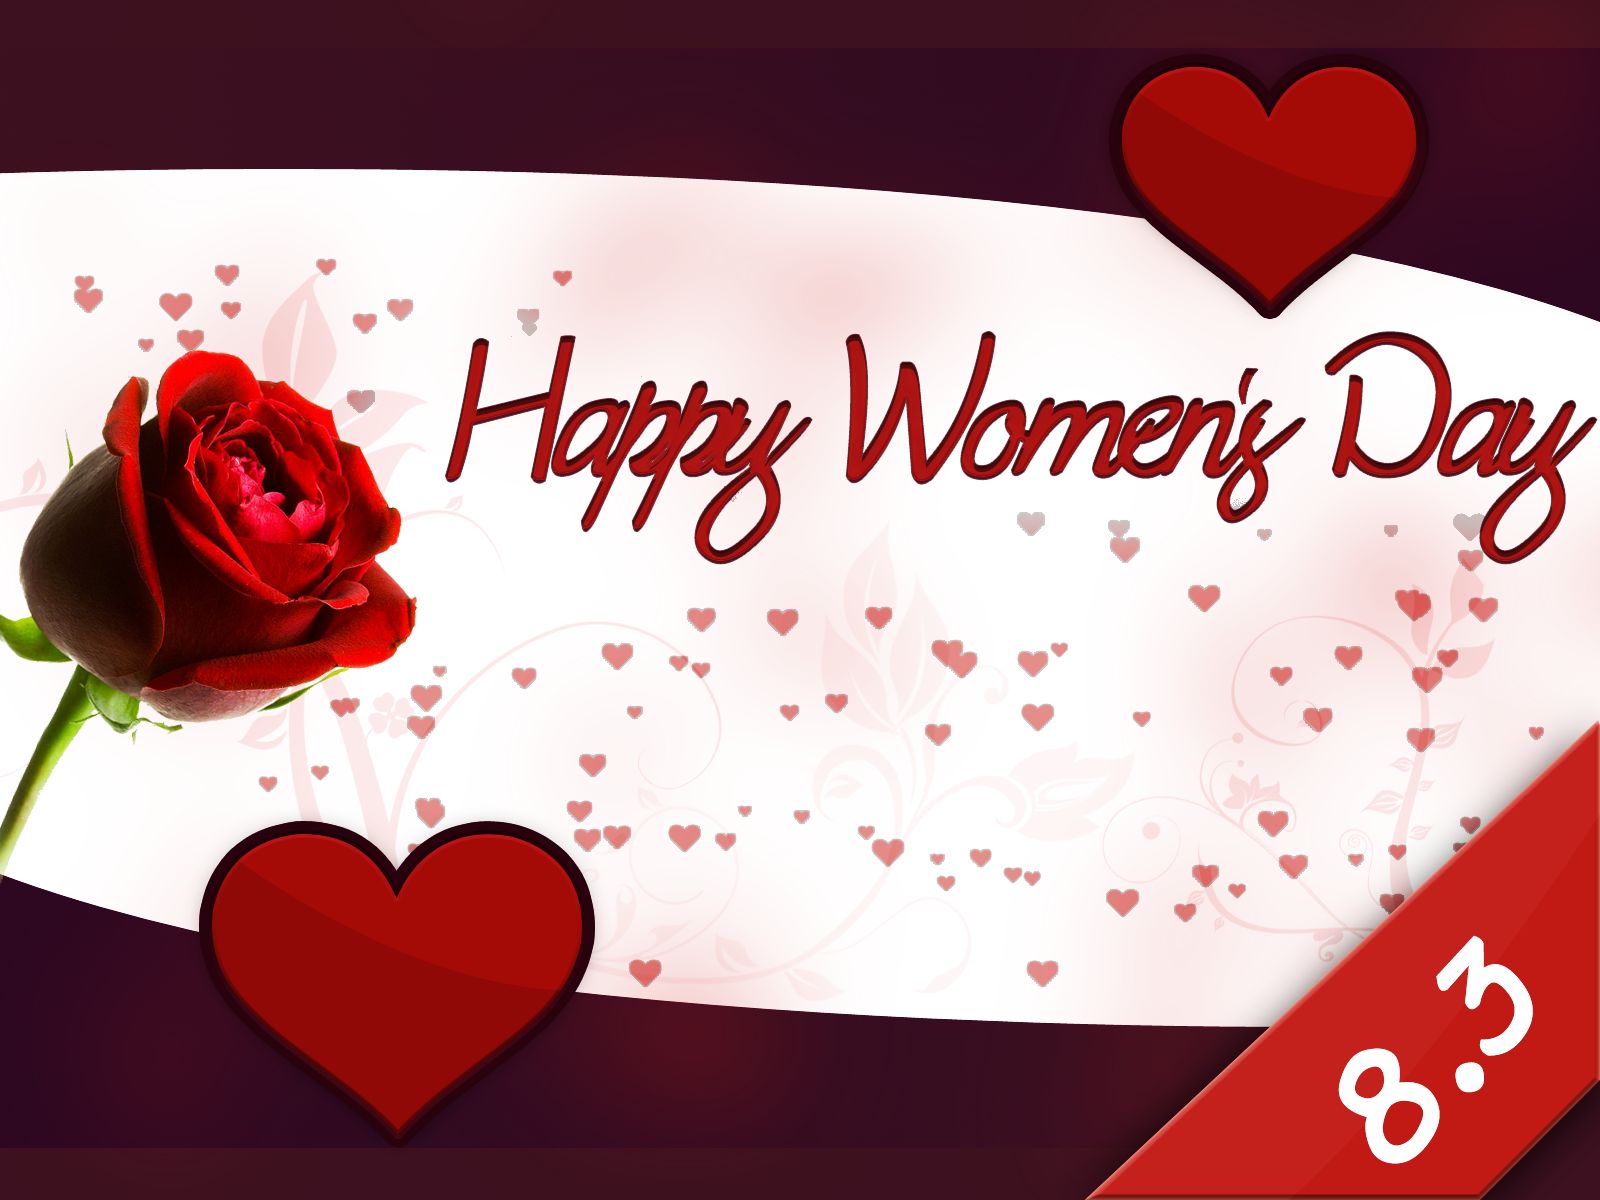 Happy womans day. Happy women's Day. Happy International women's Day. Happy women's Day картинки.